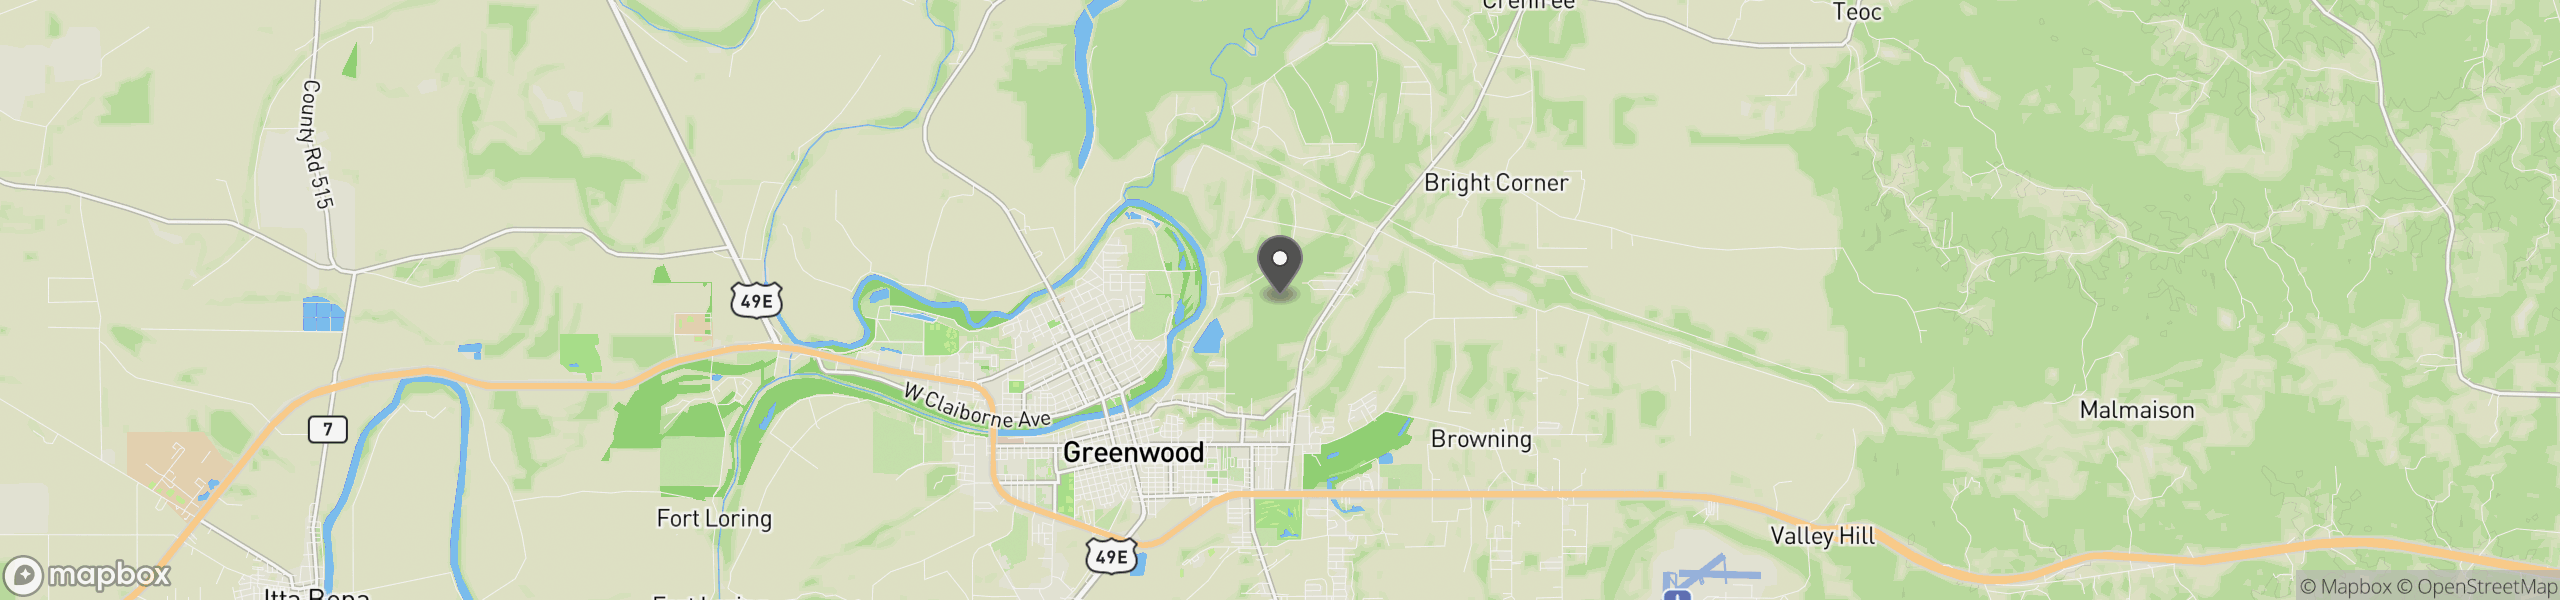 Greenwood, MS